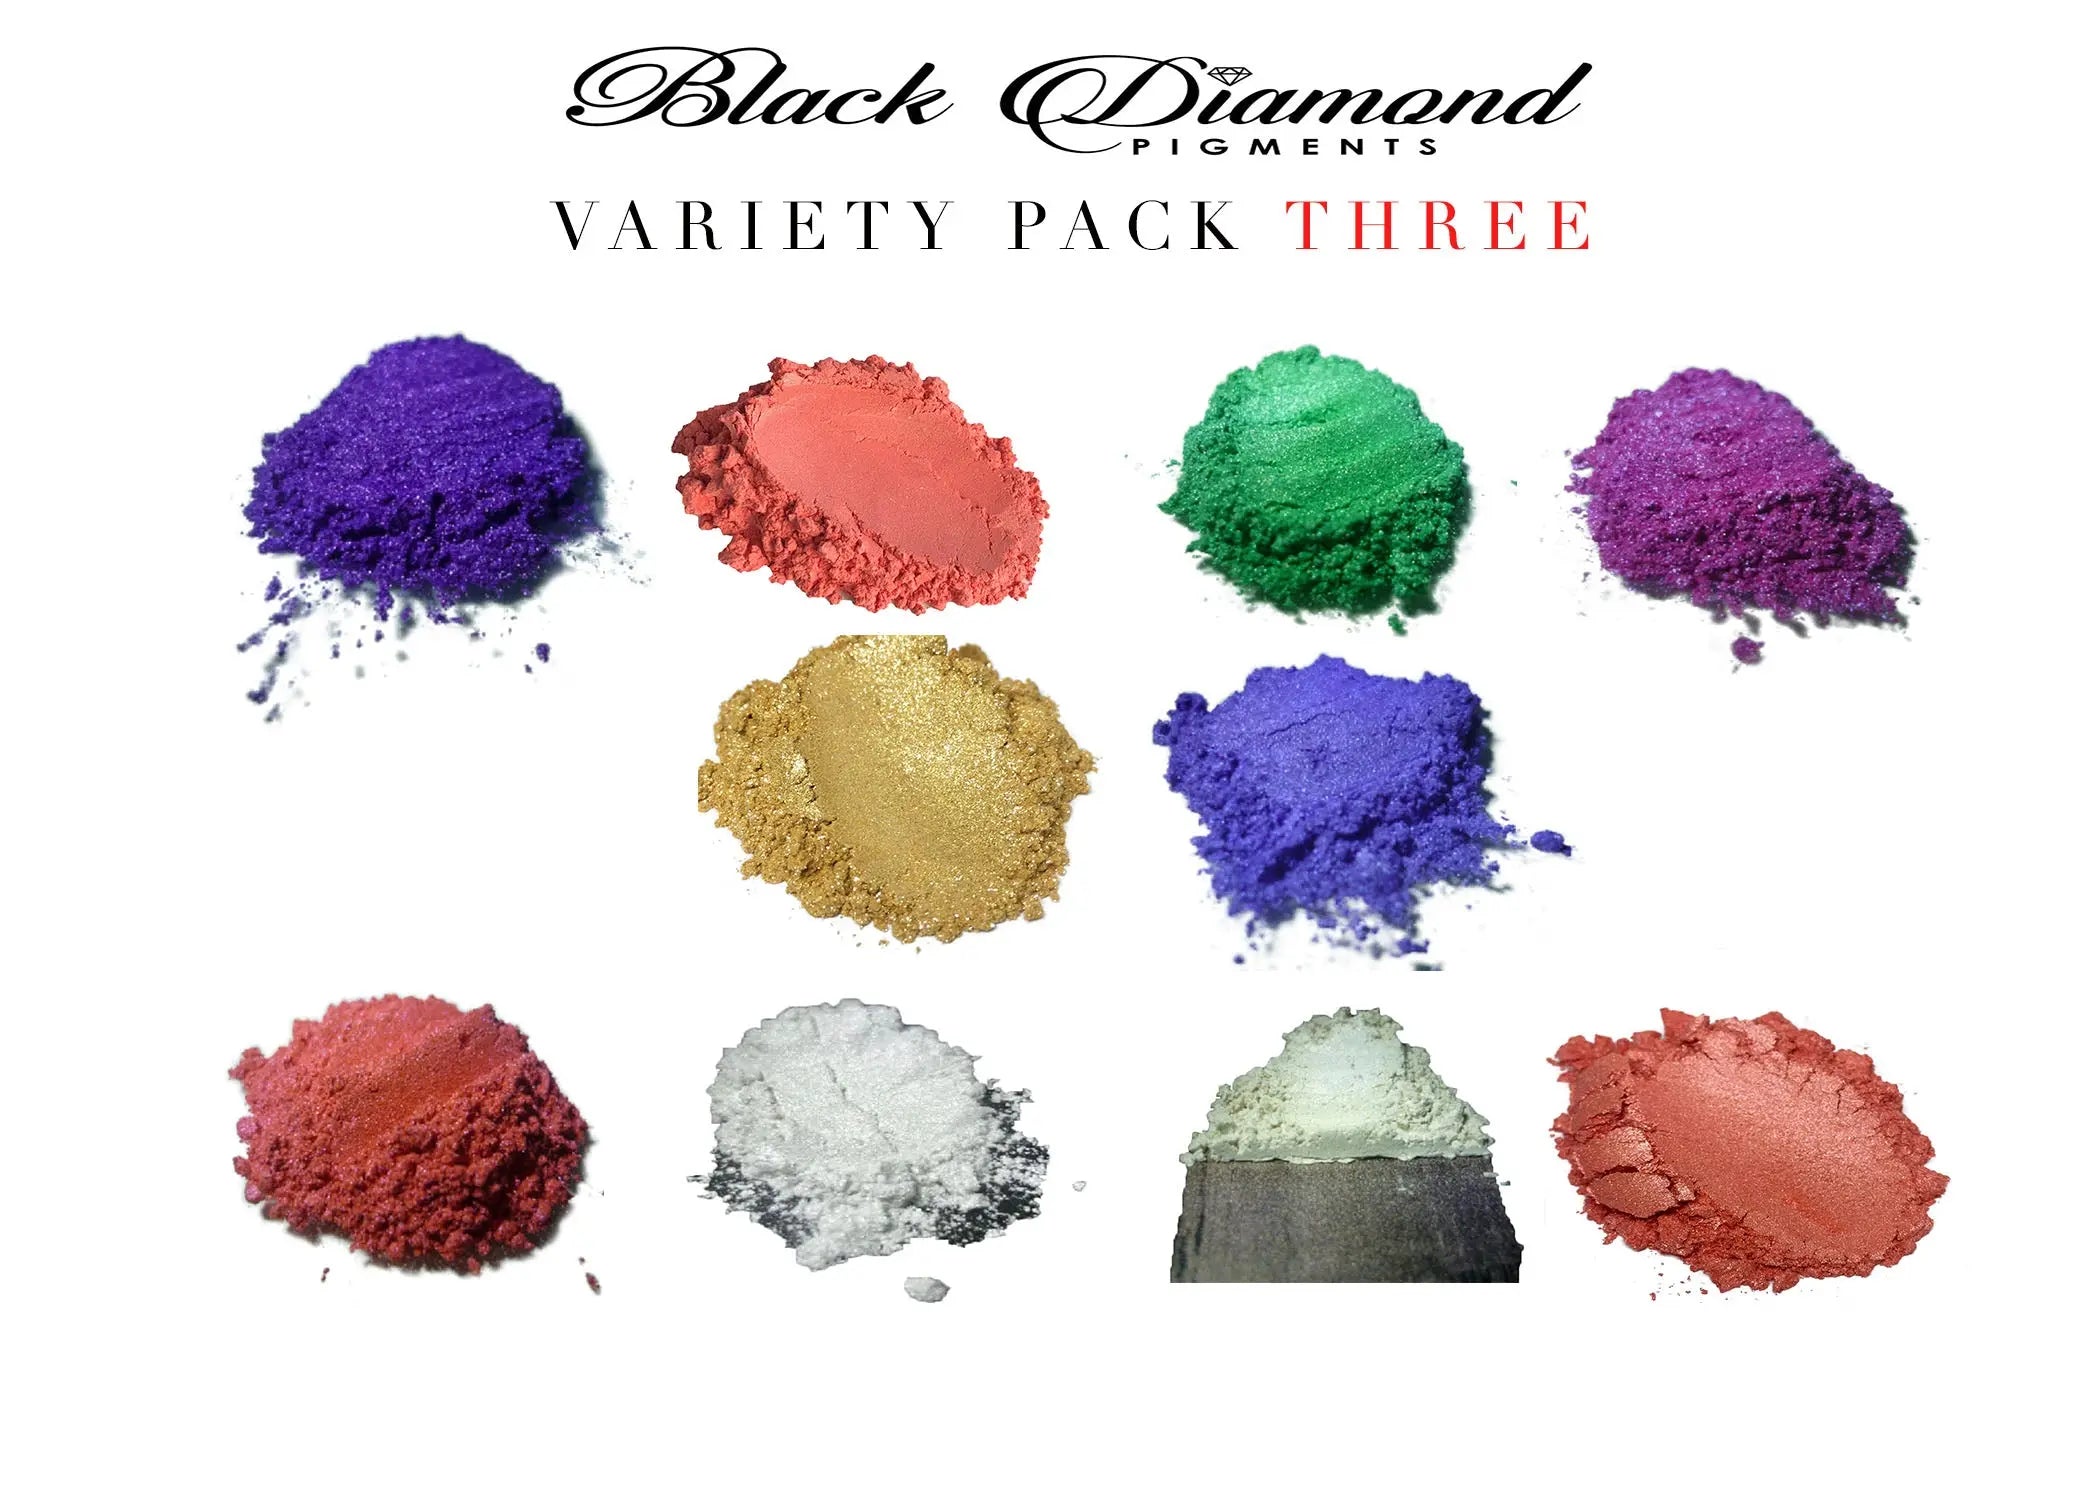 U.S. Art Supply Jewelescent Midnight Black Mica Pearl Powder Pigment, 2 oz (57g) Bottle - Non-Toxic Metallic Color Dye